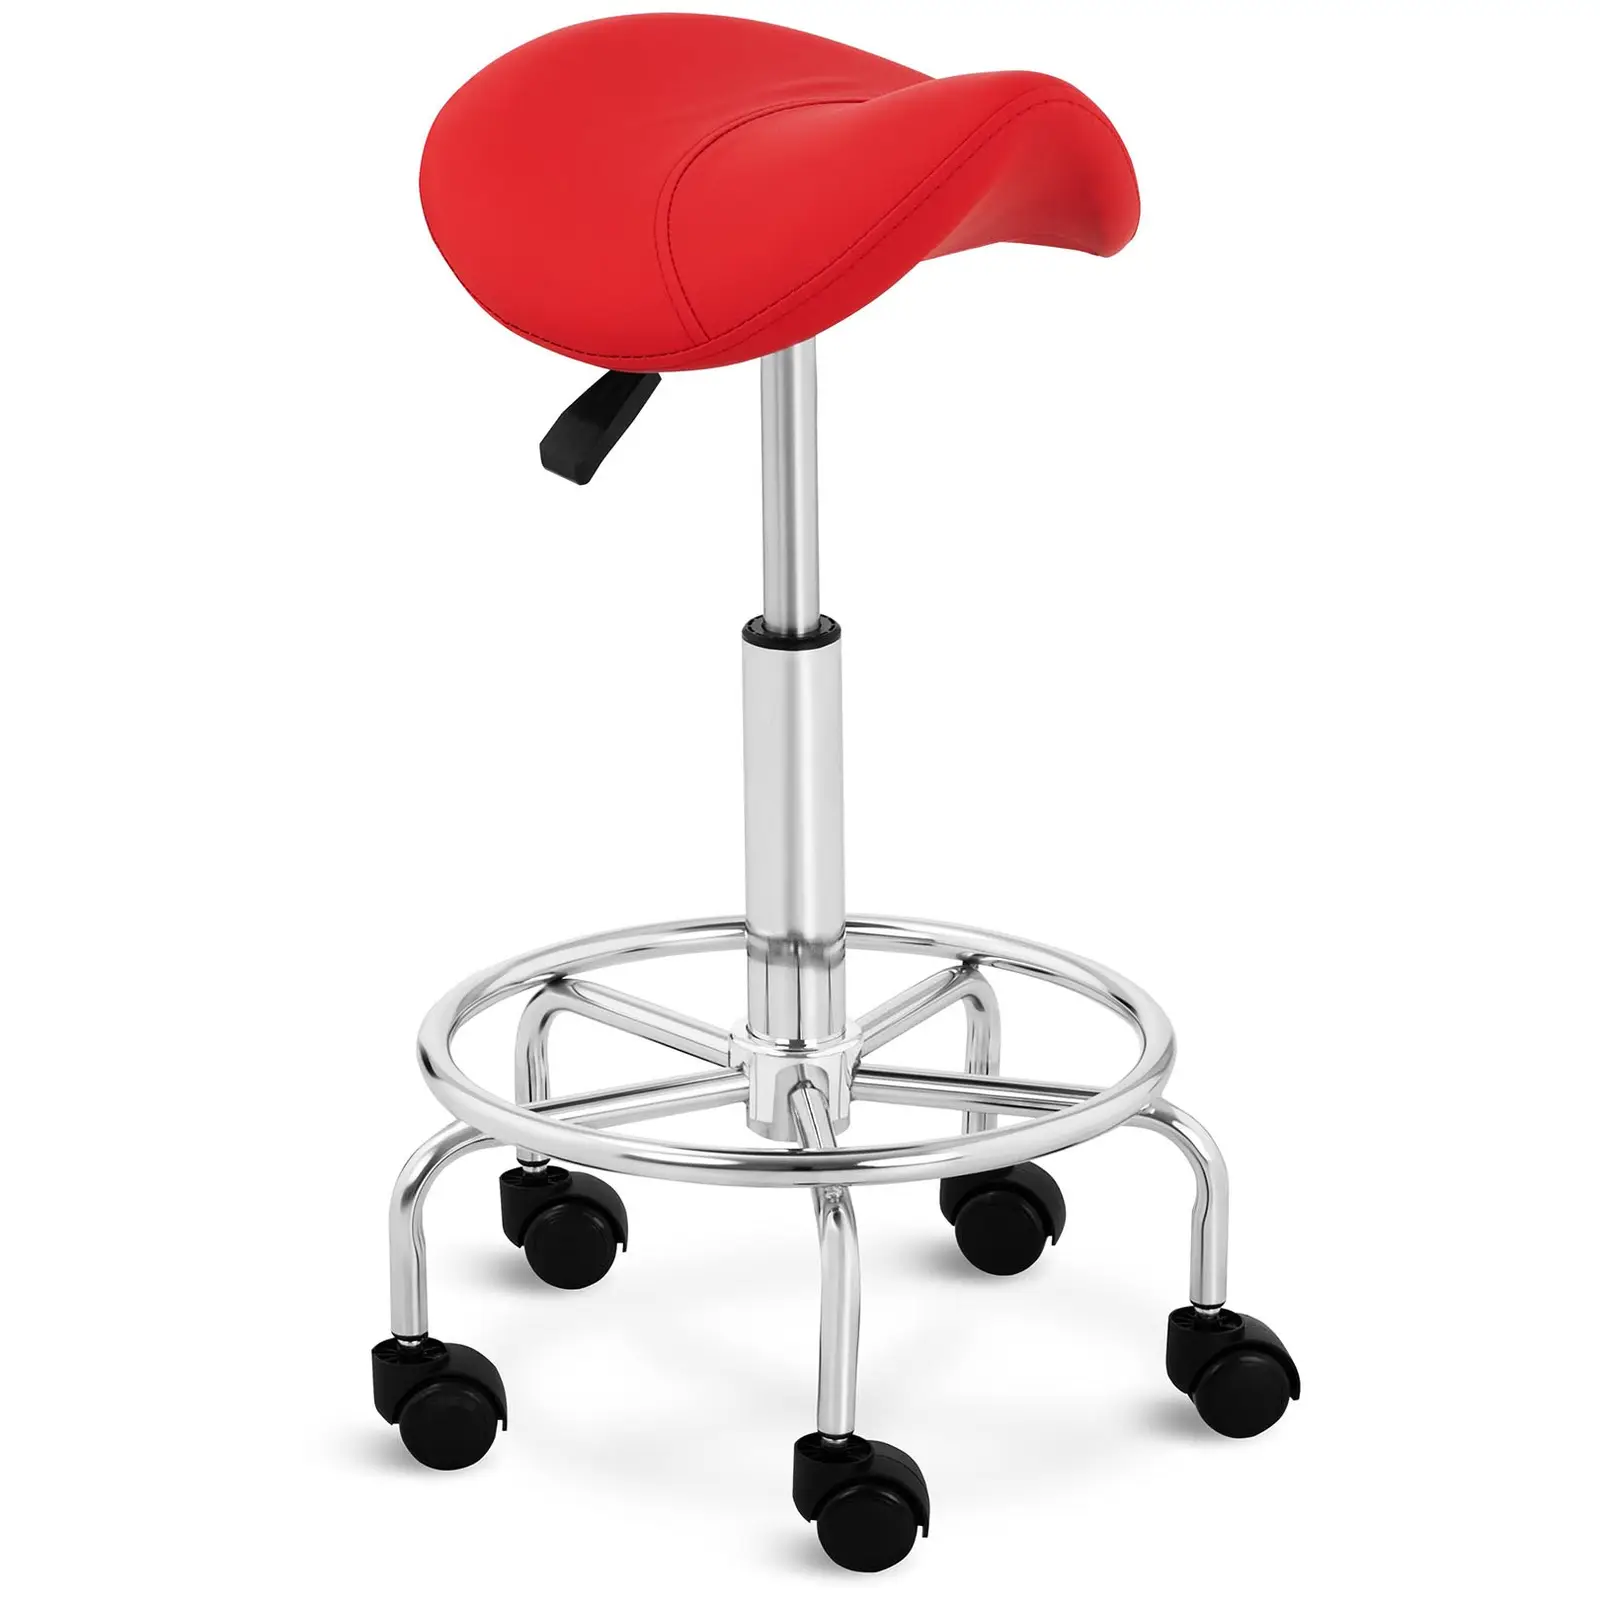 Sedlasti stol - 570 - 690 mm - 150 kg - rdeč